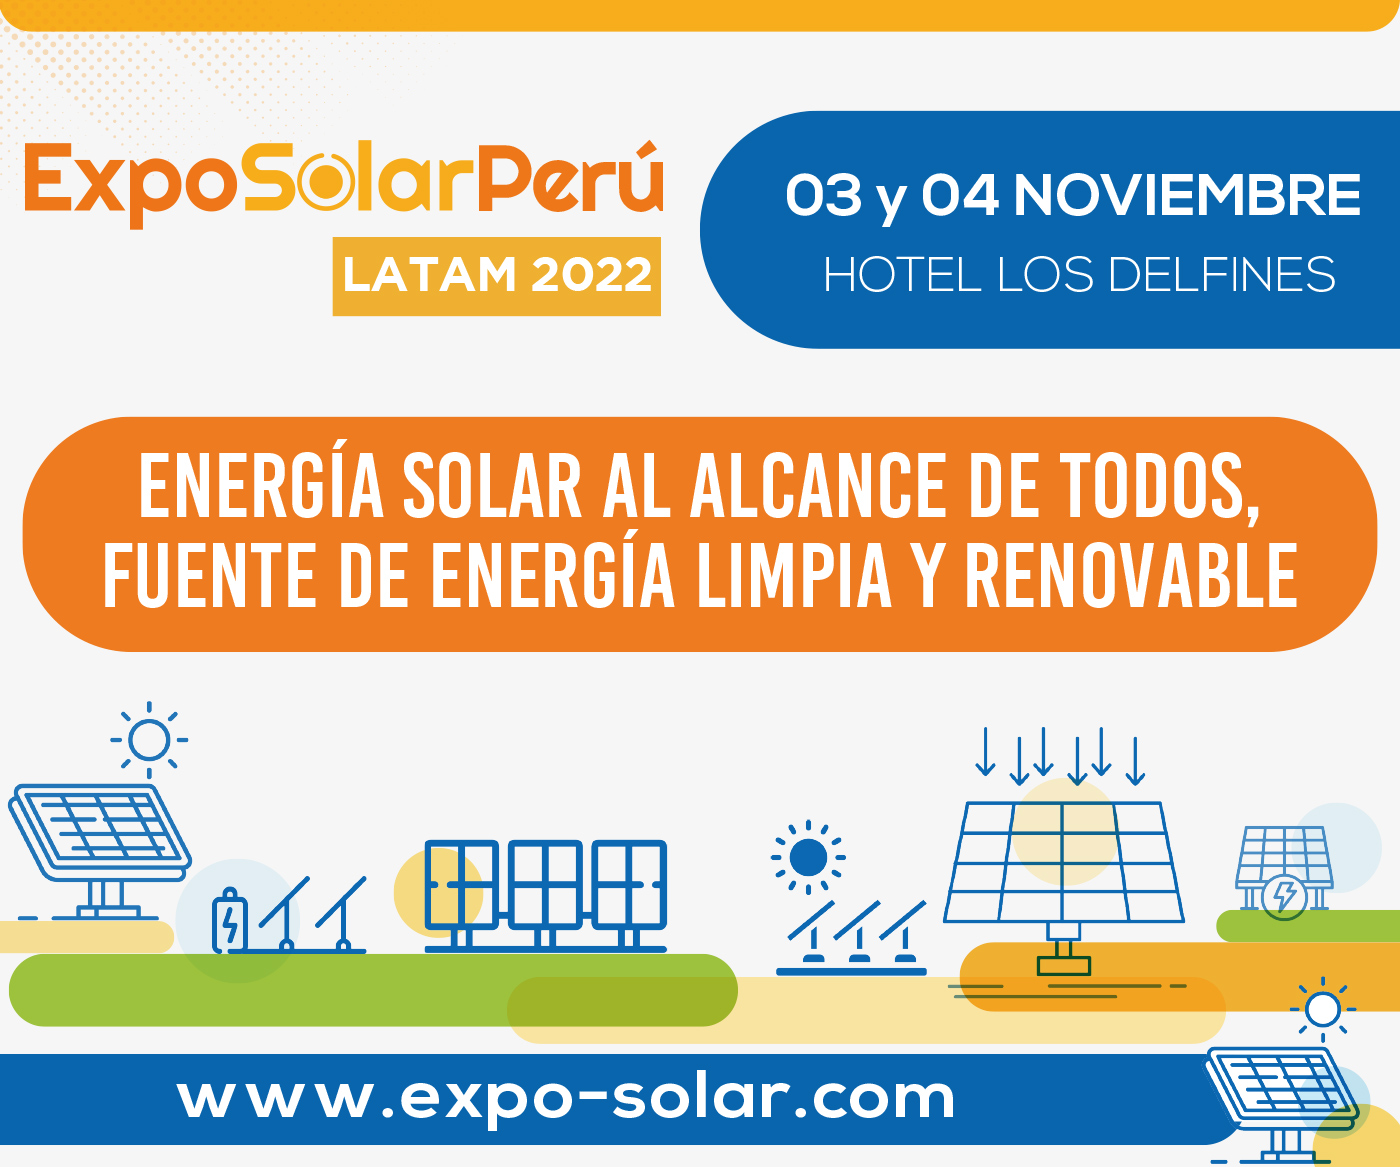 Expo Solar